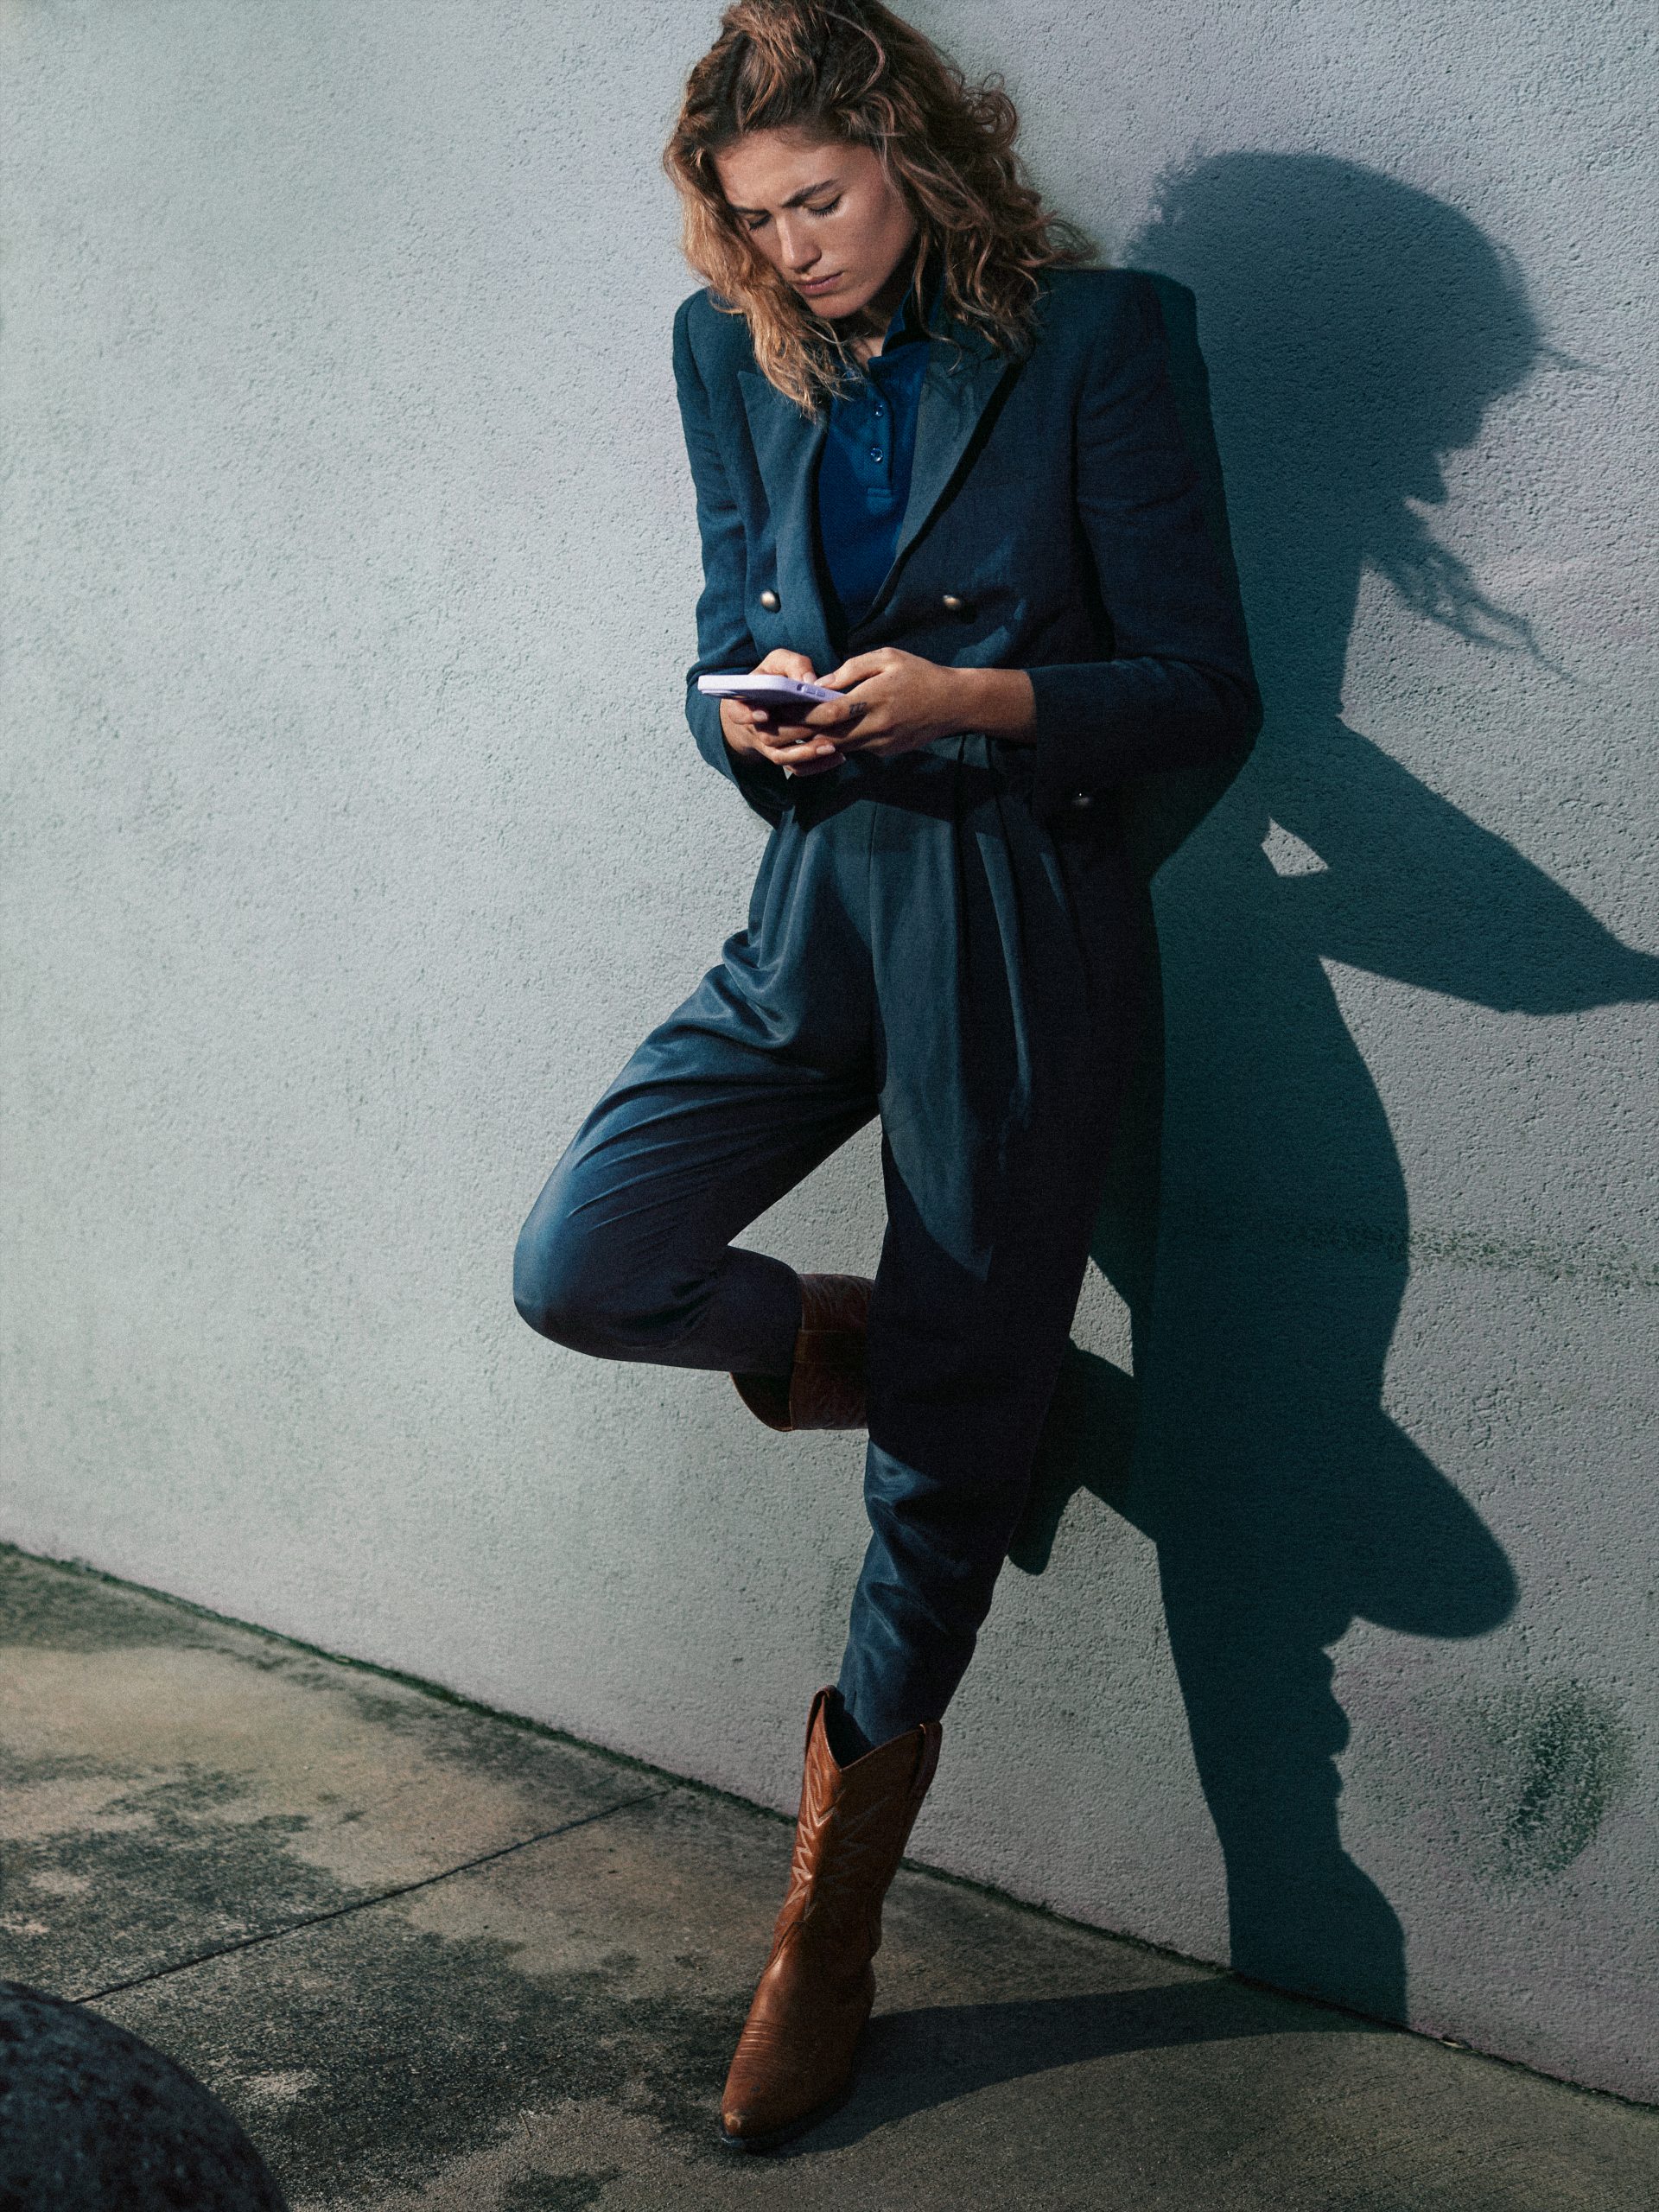 Editorial for Elle Italy with Altyn Isabella blue blazer by Xavi Gordo | Raquel Sueiro Management